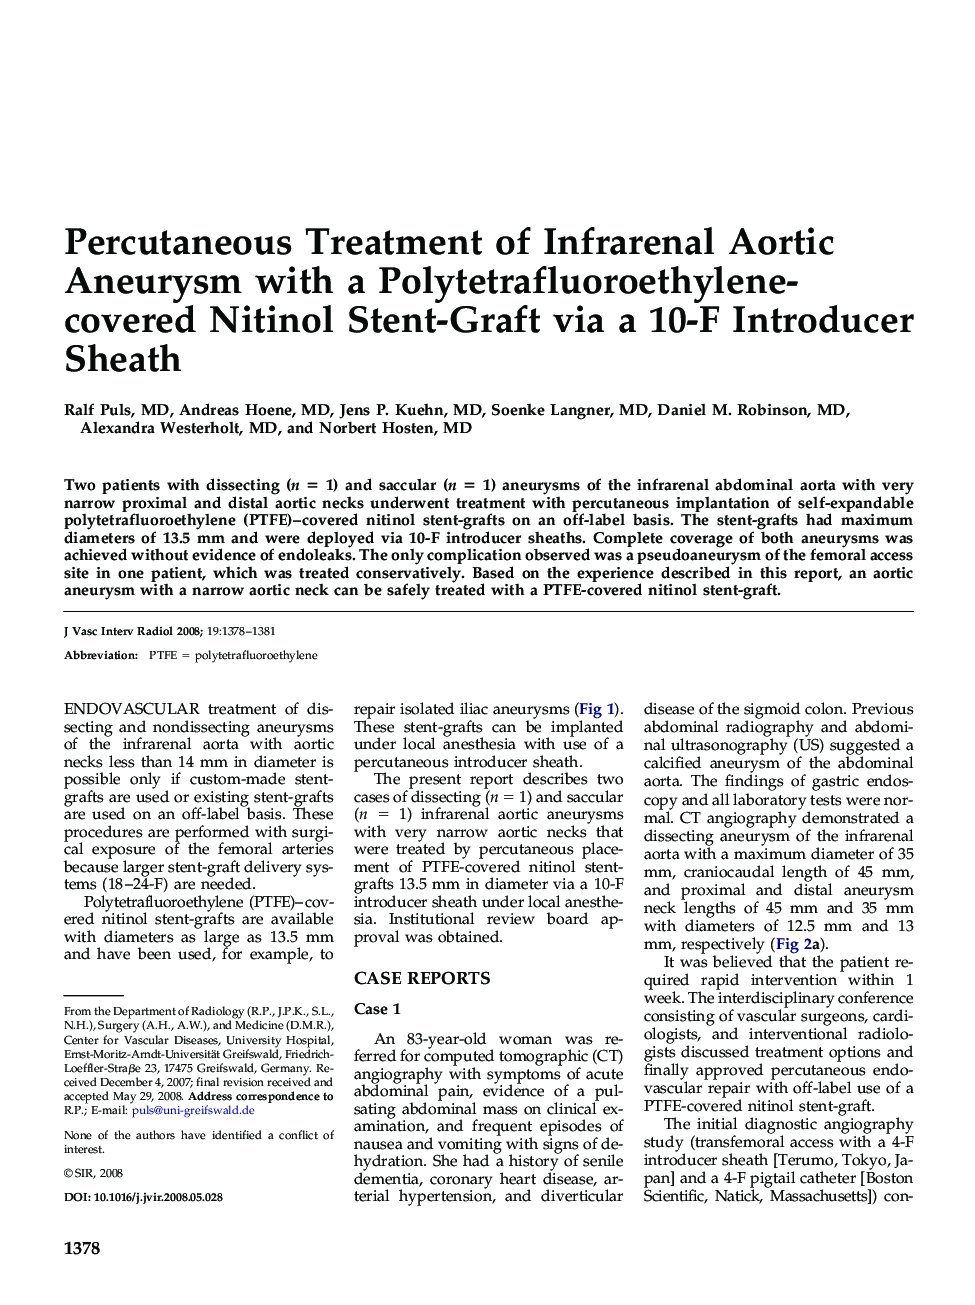 Percutaneous Treatment of Infrarenal Aortic Aneurysm with a Polytetrafluoroethylene-covered Nitinol Stent-Graft via a 10-F Introducer Sheath